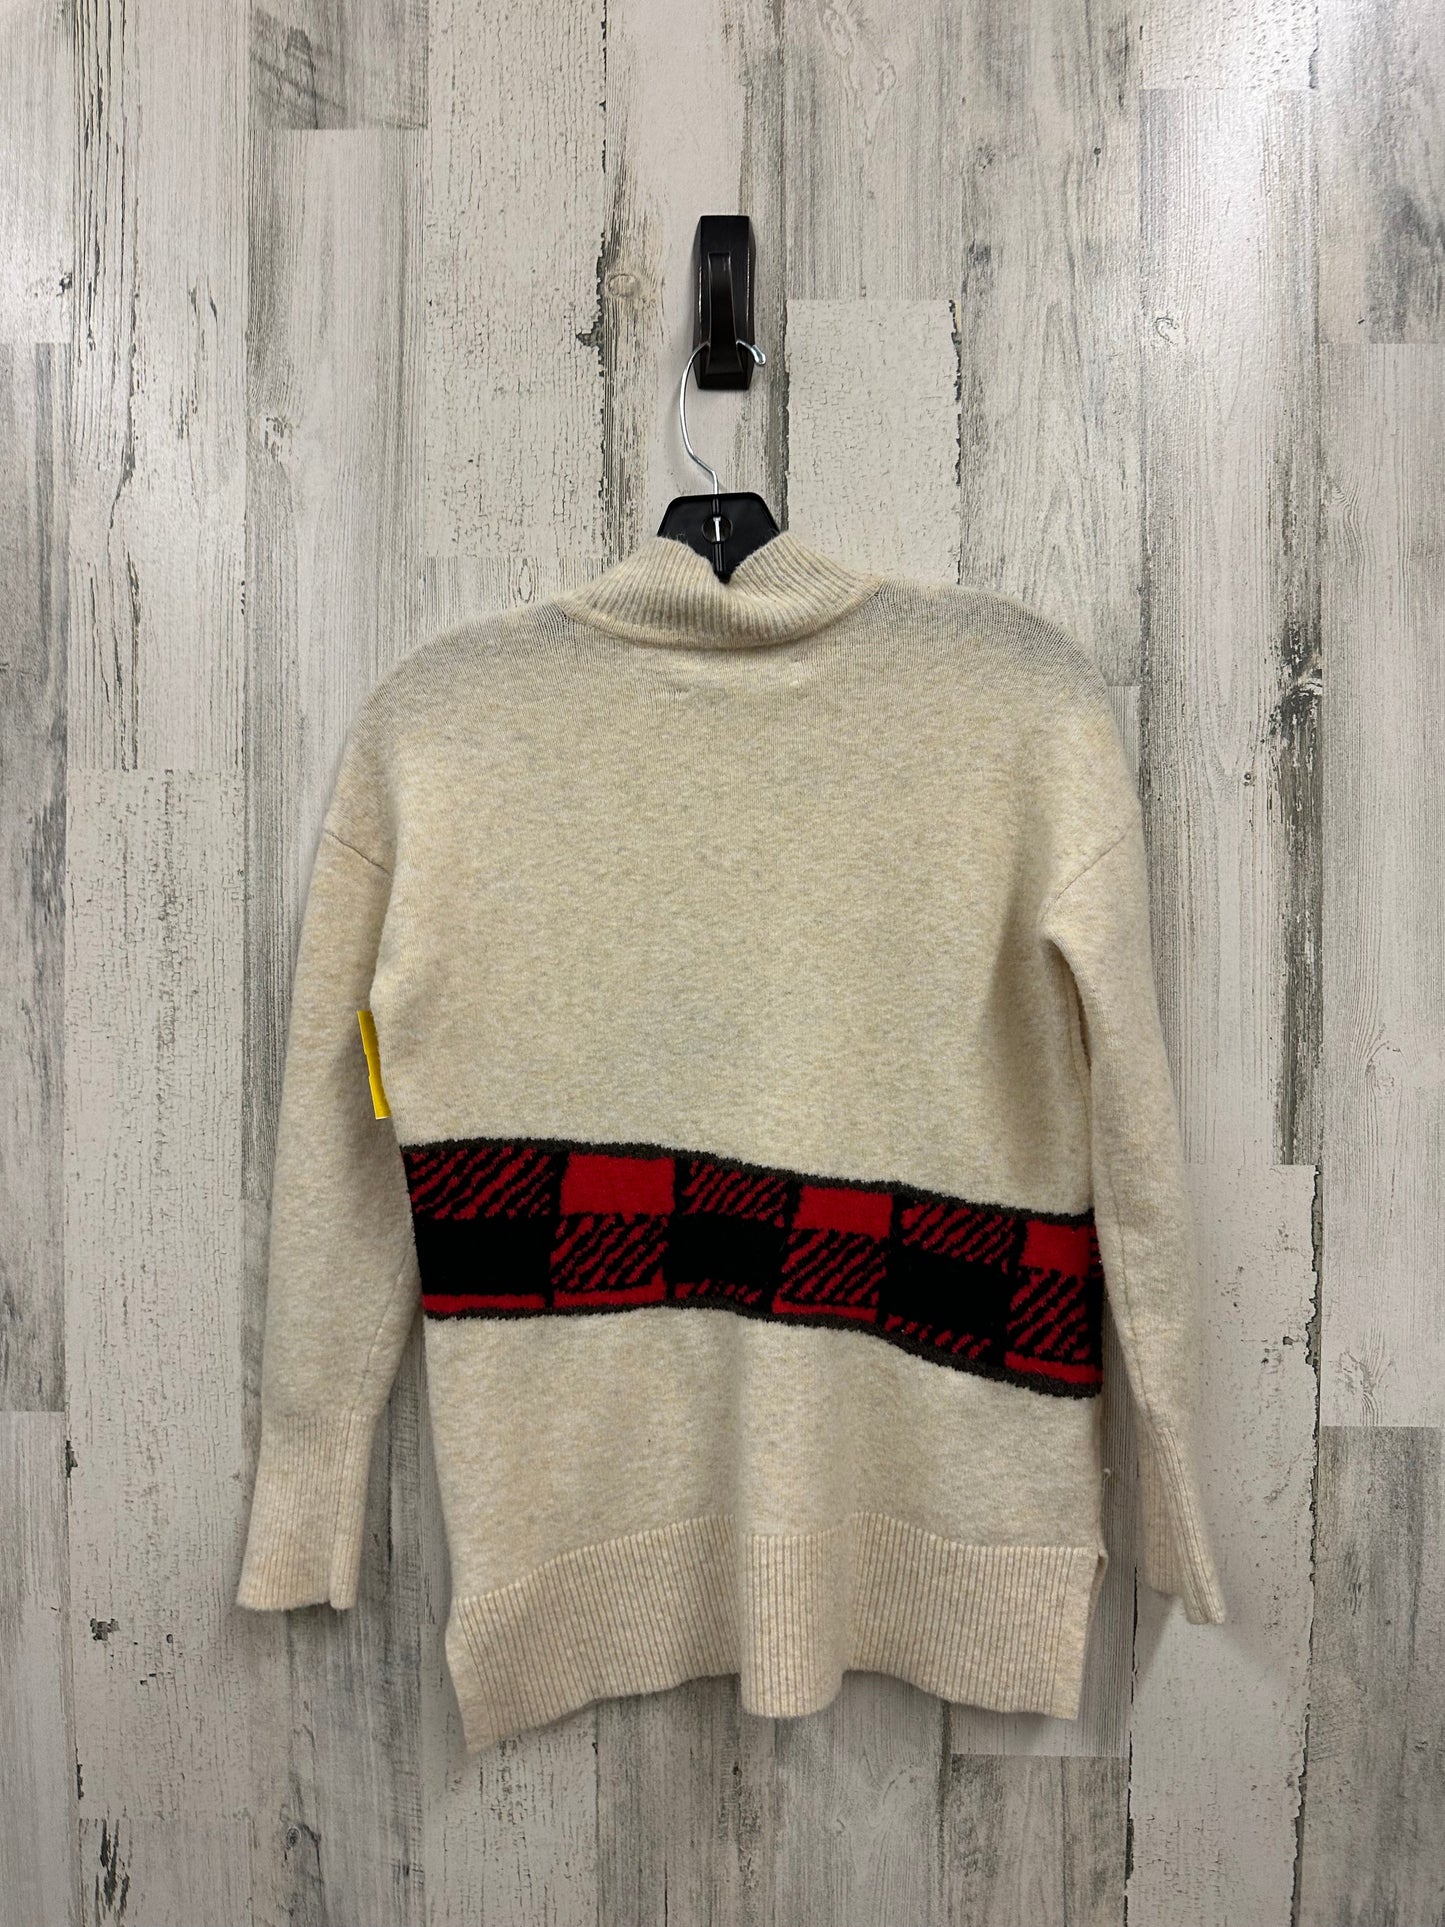 Sweater By Loft  Size: Xs